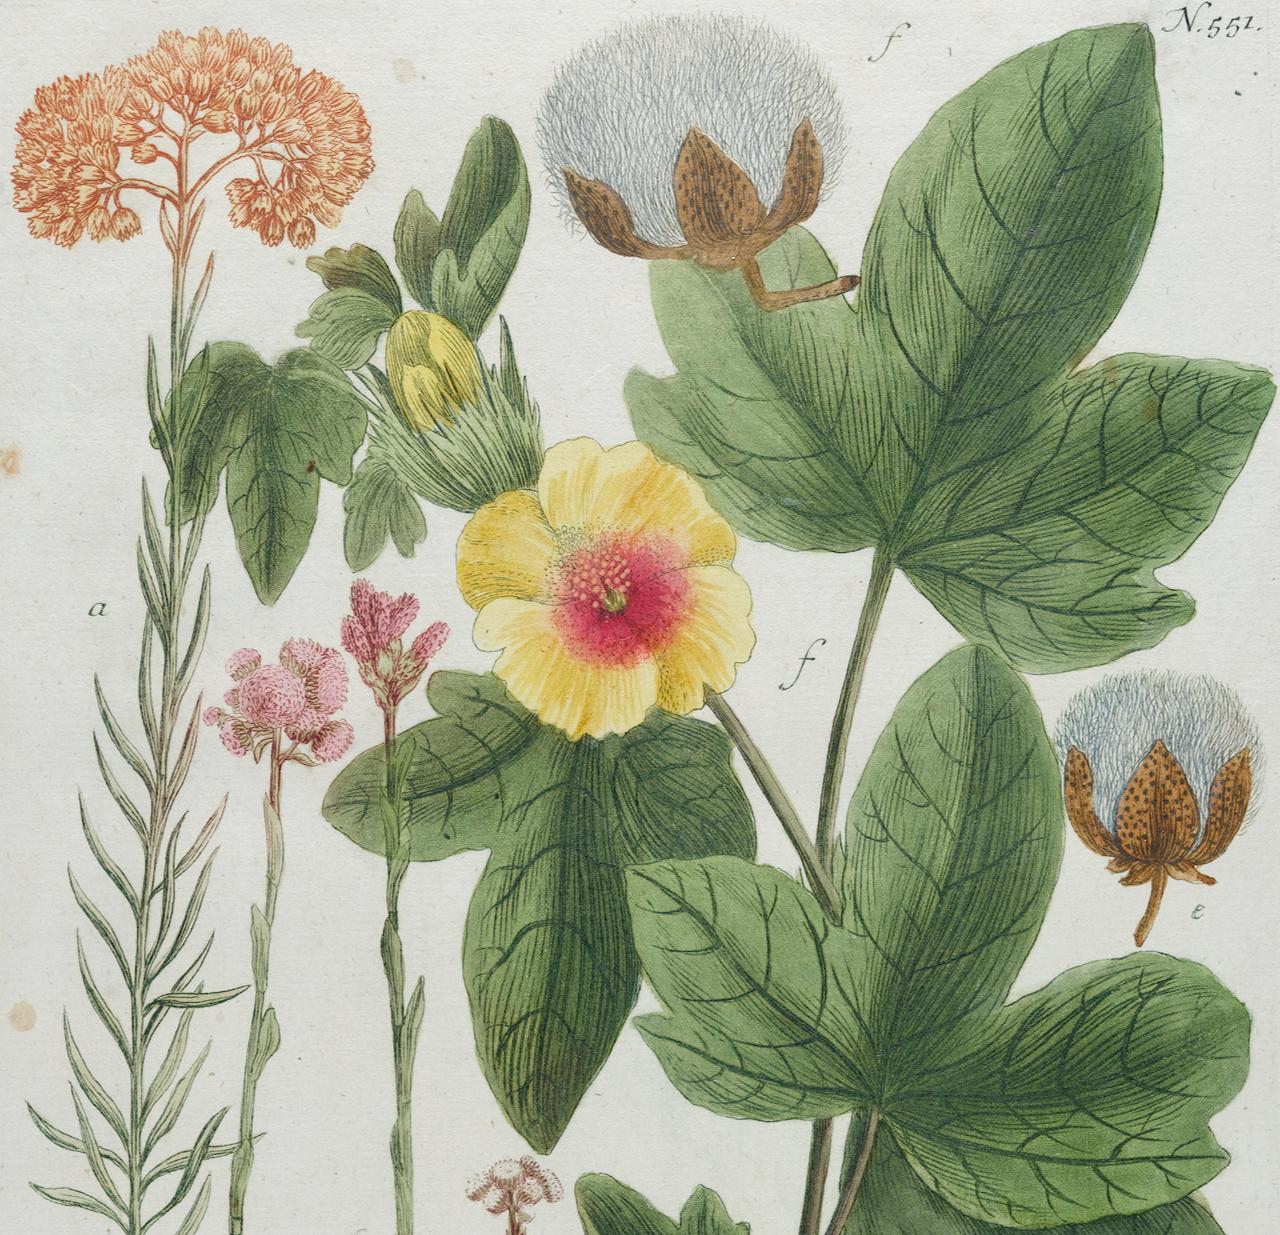 Cotton Plant: An 18th Century Hand-colored Botanical Engraving by J. Weinmann - Naturalistic Print by Johann Wilhelm Weinmann